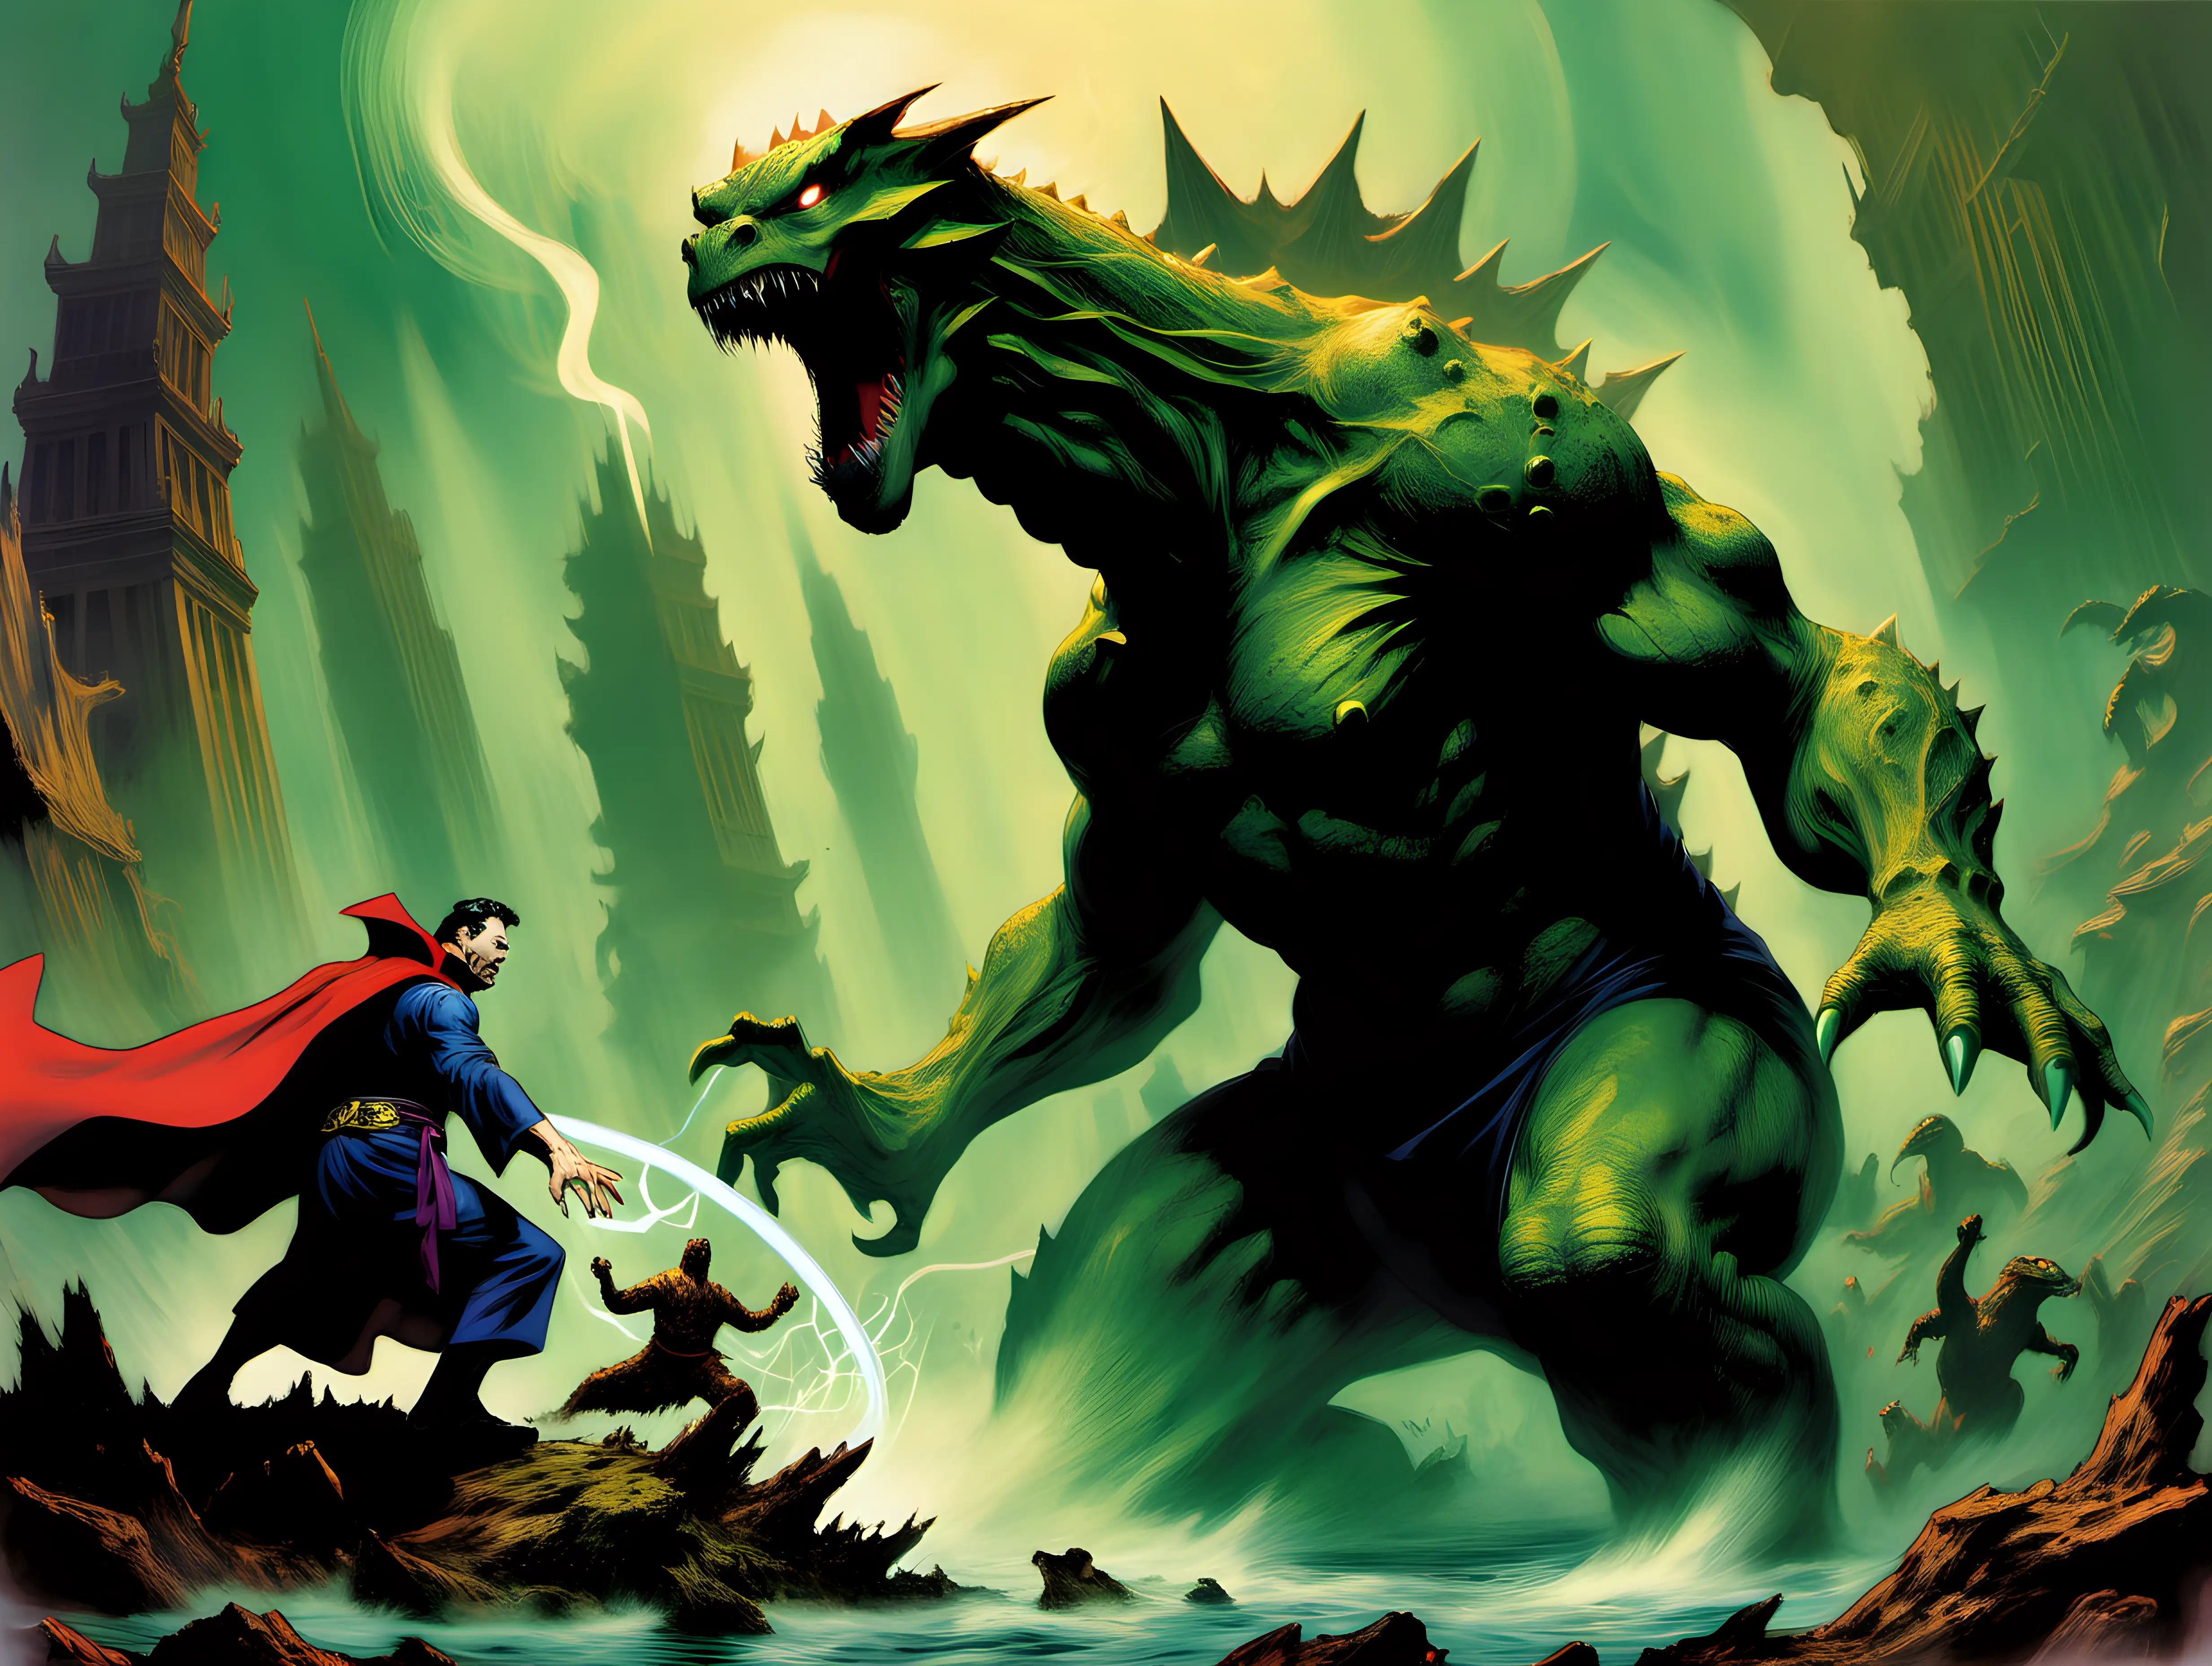 Doctor Strange Battles Godzilla in Frank FrazettaInspired Ancient Swamp